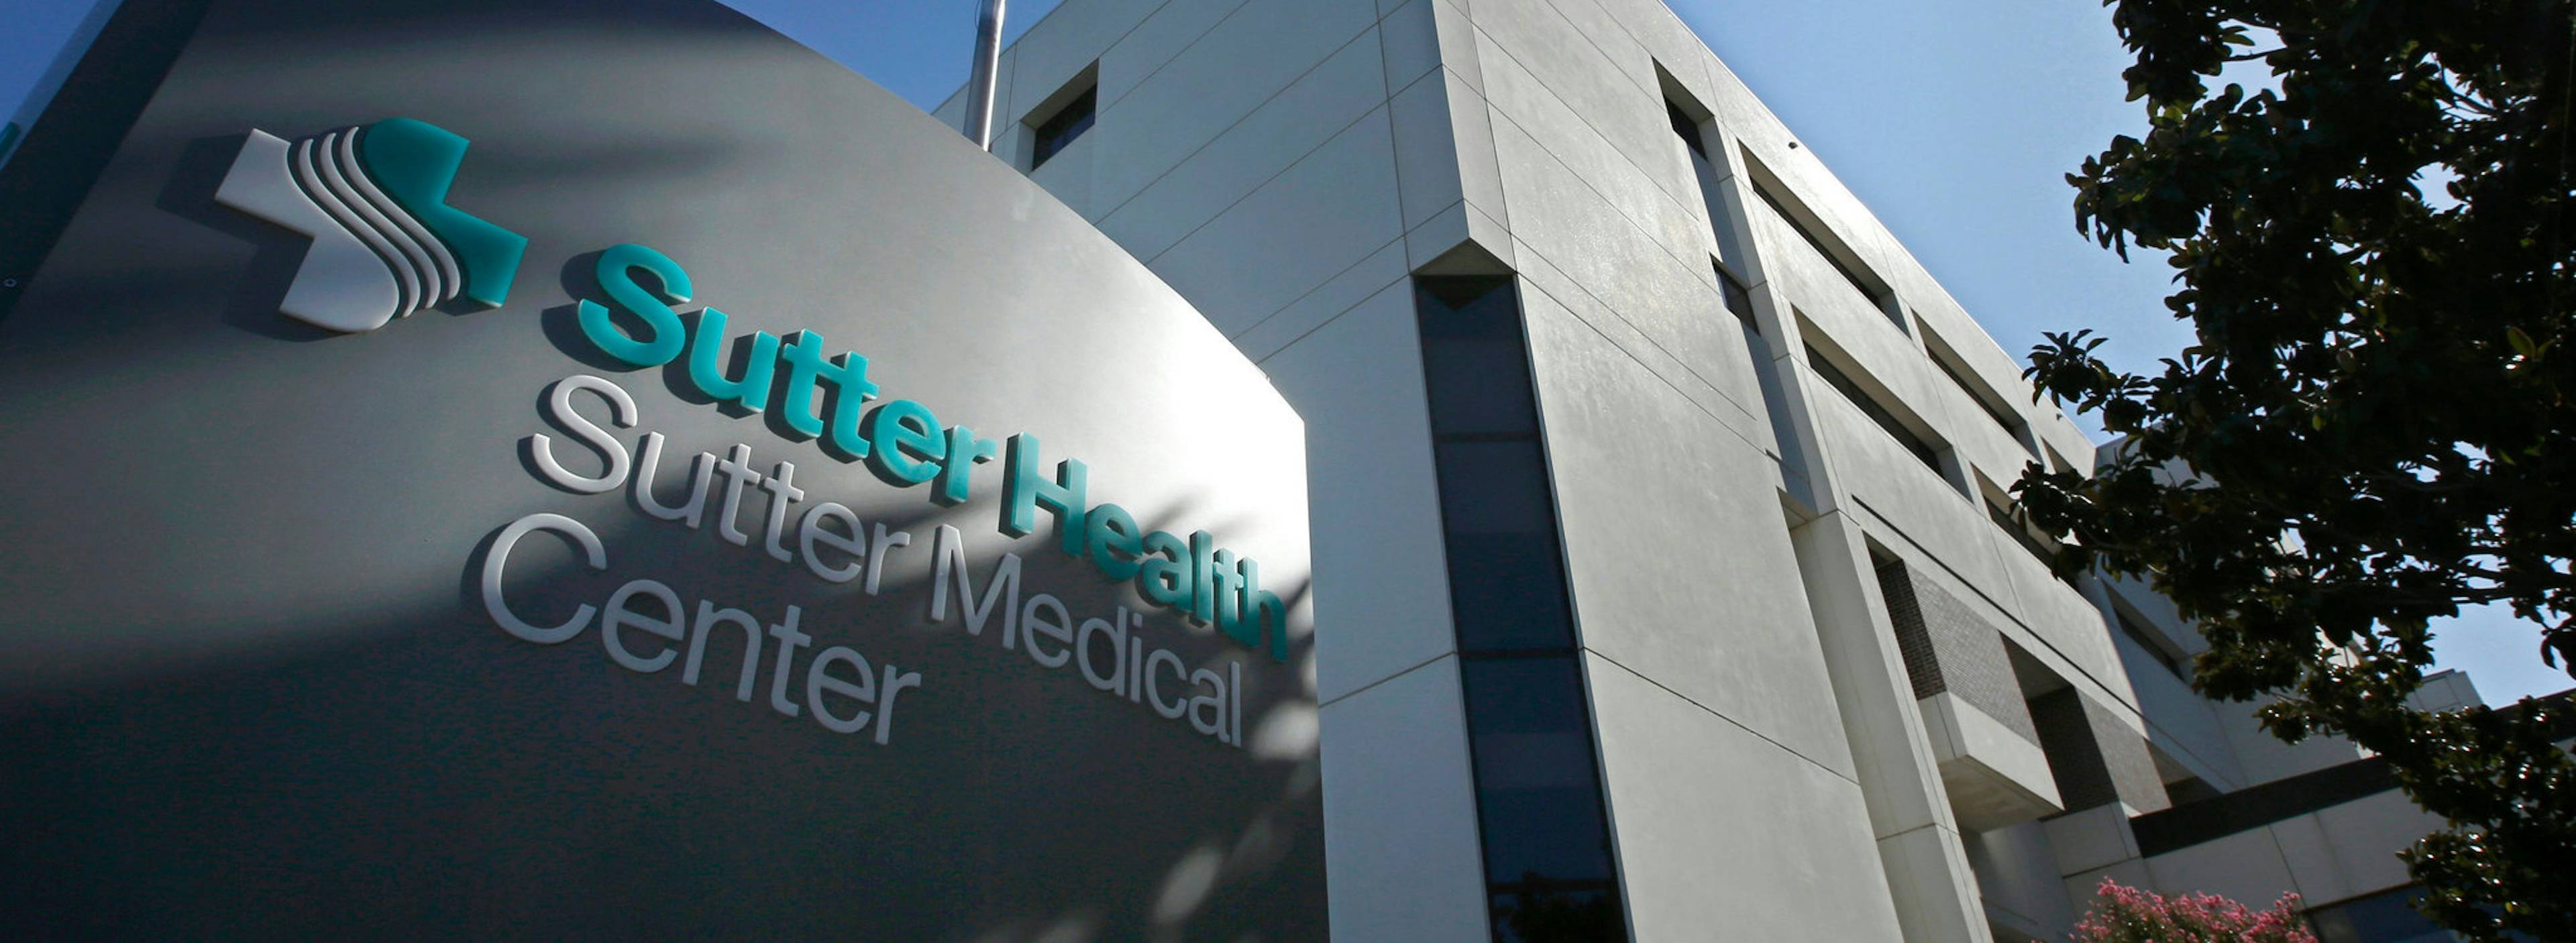 Photo of Sutter Medical Center